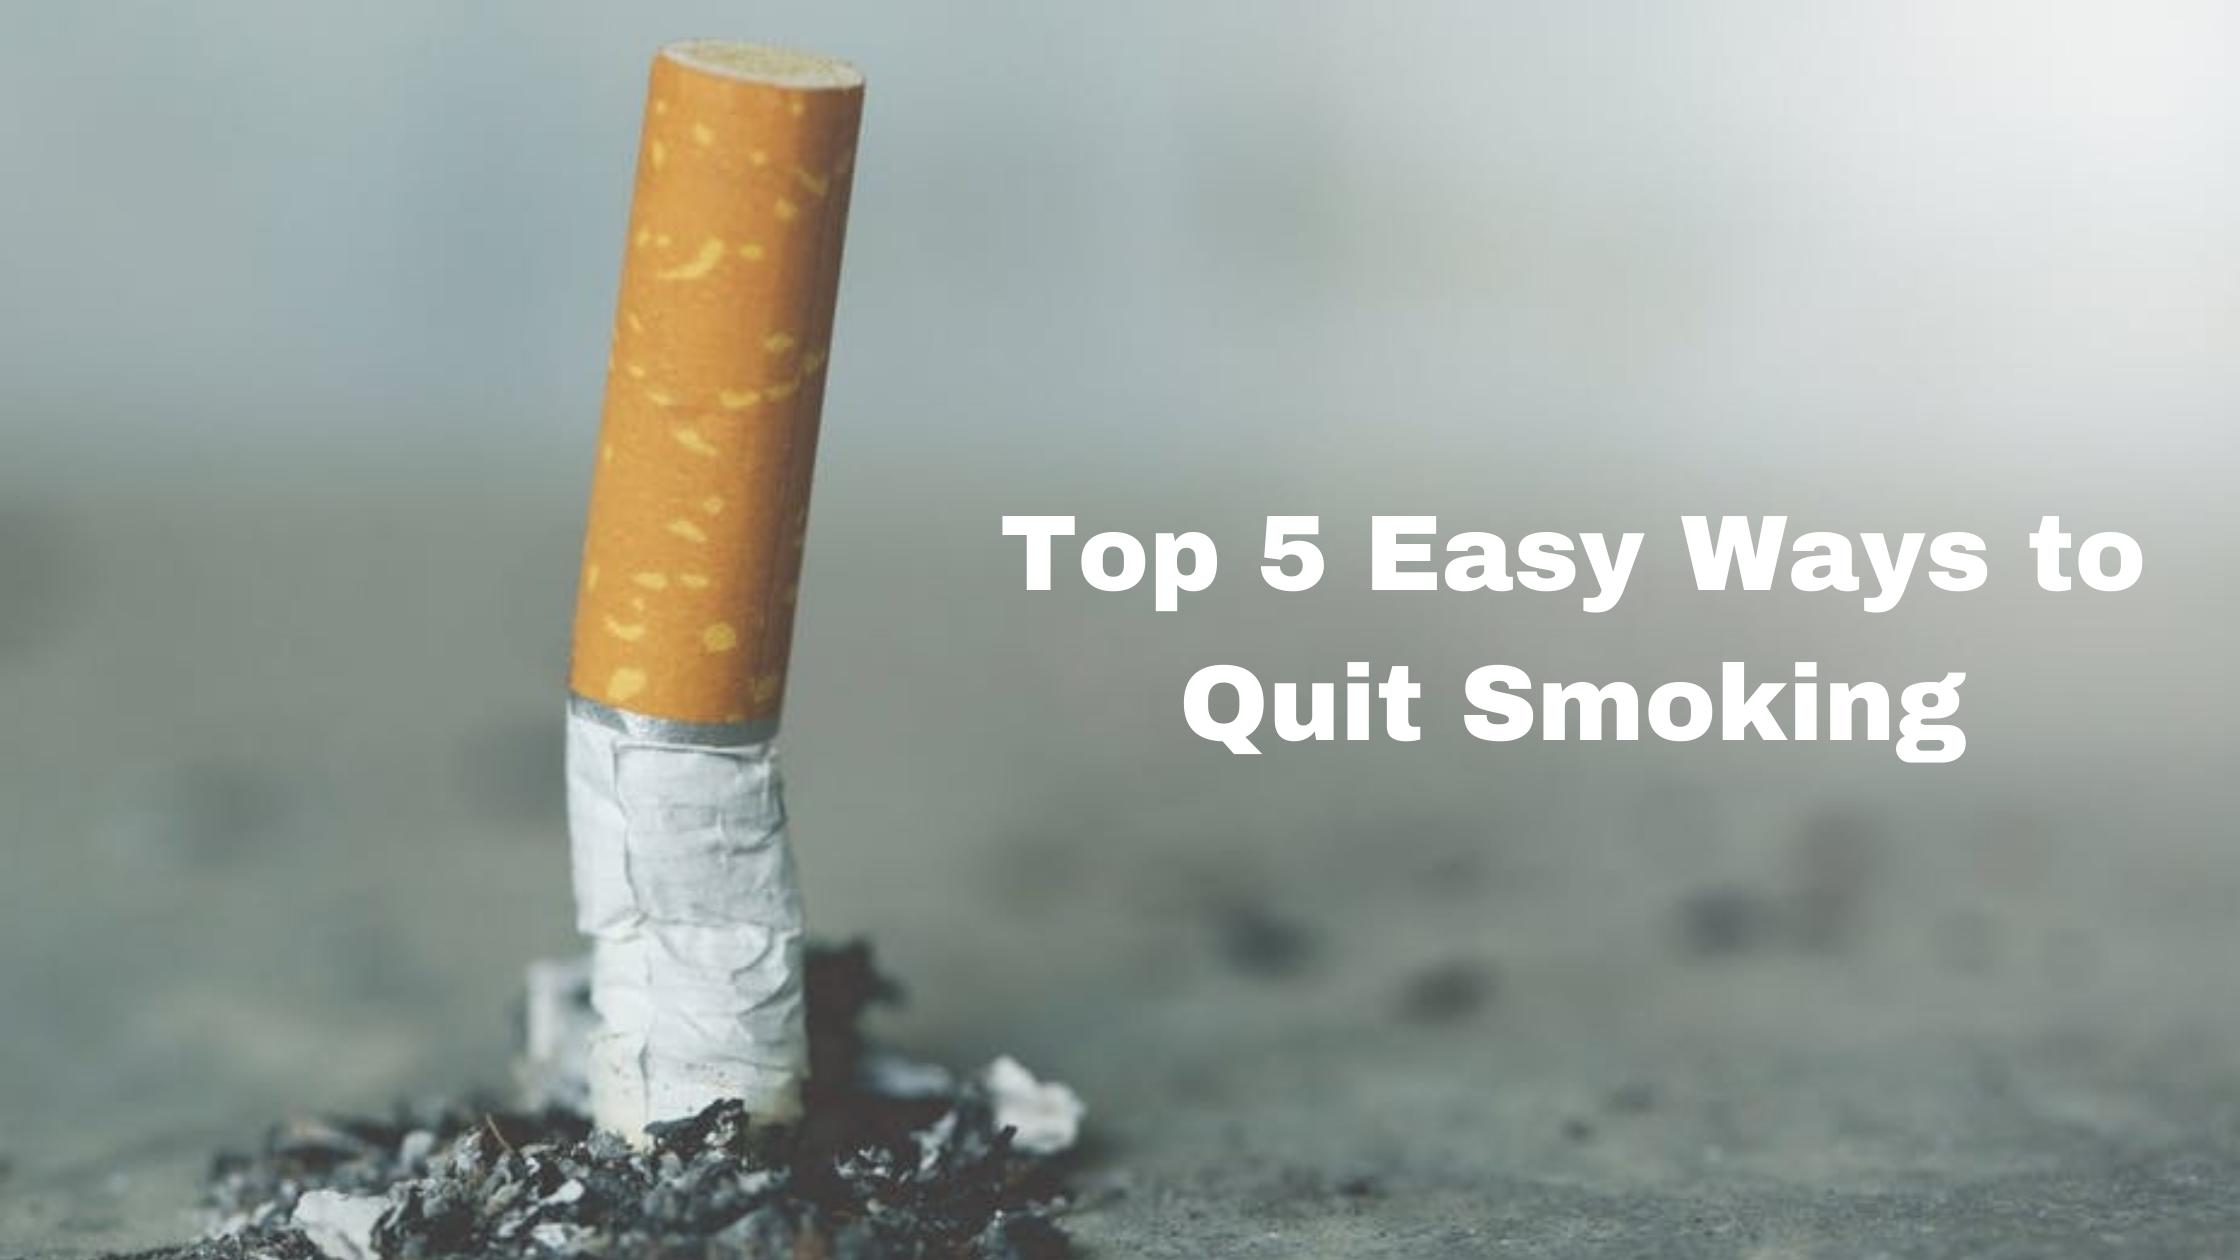 Top 5 Easy Ways to Quit Smoking